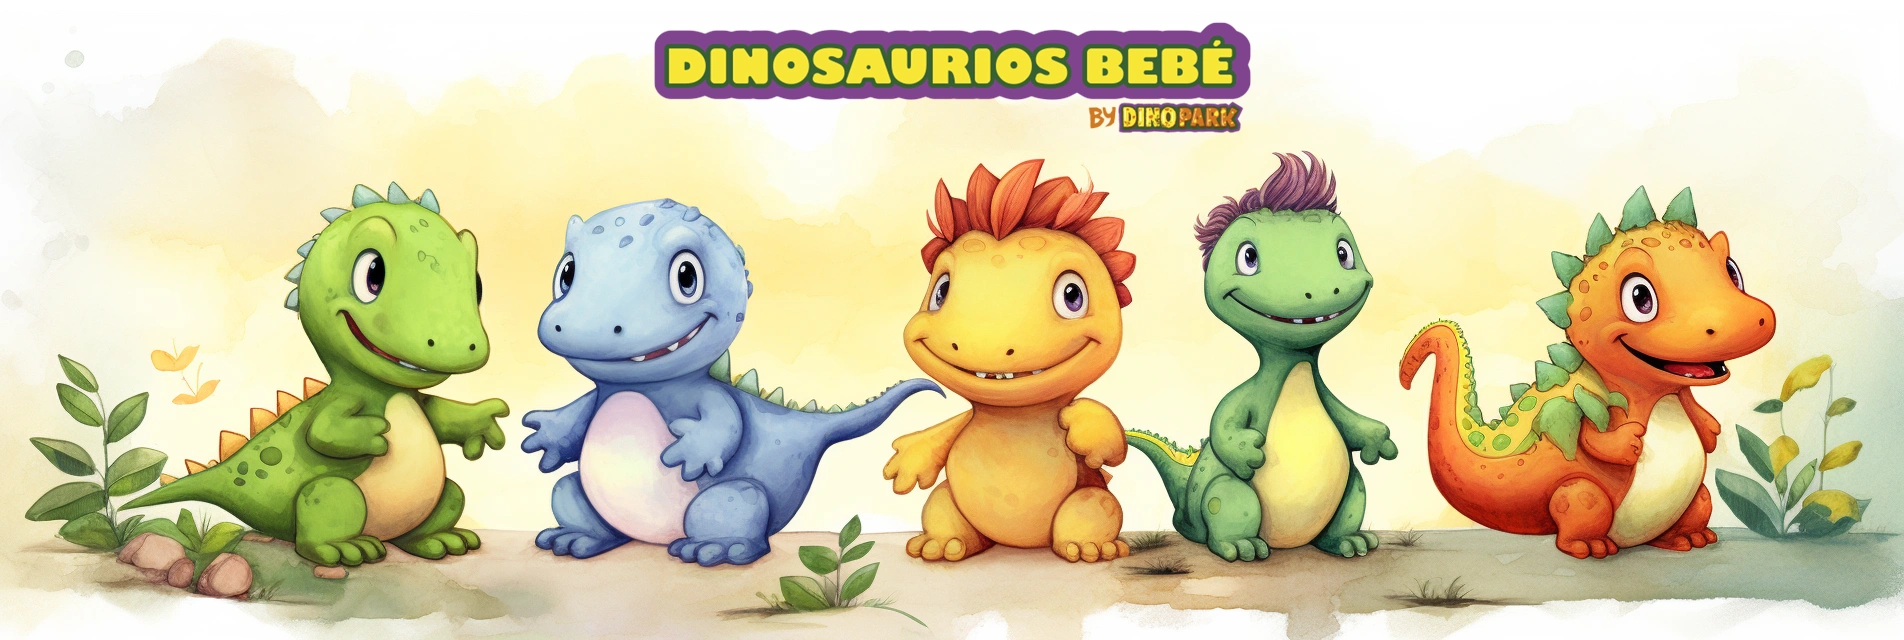 Dinosaurios bebé